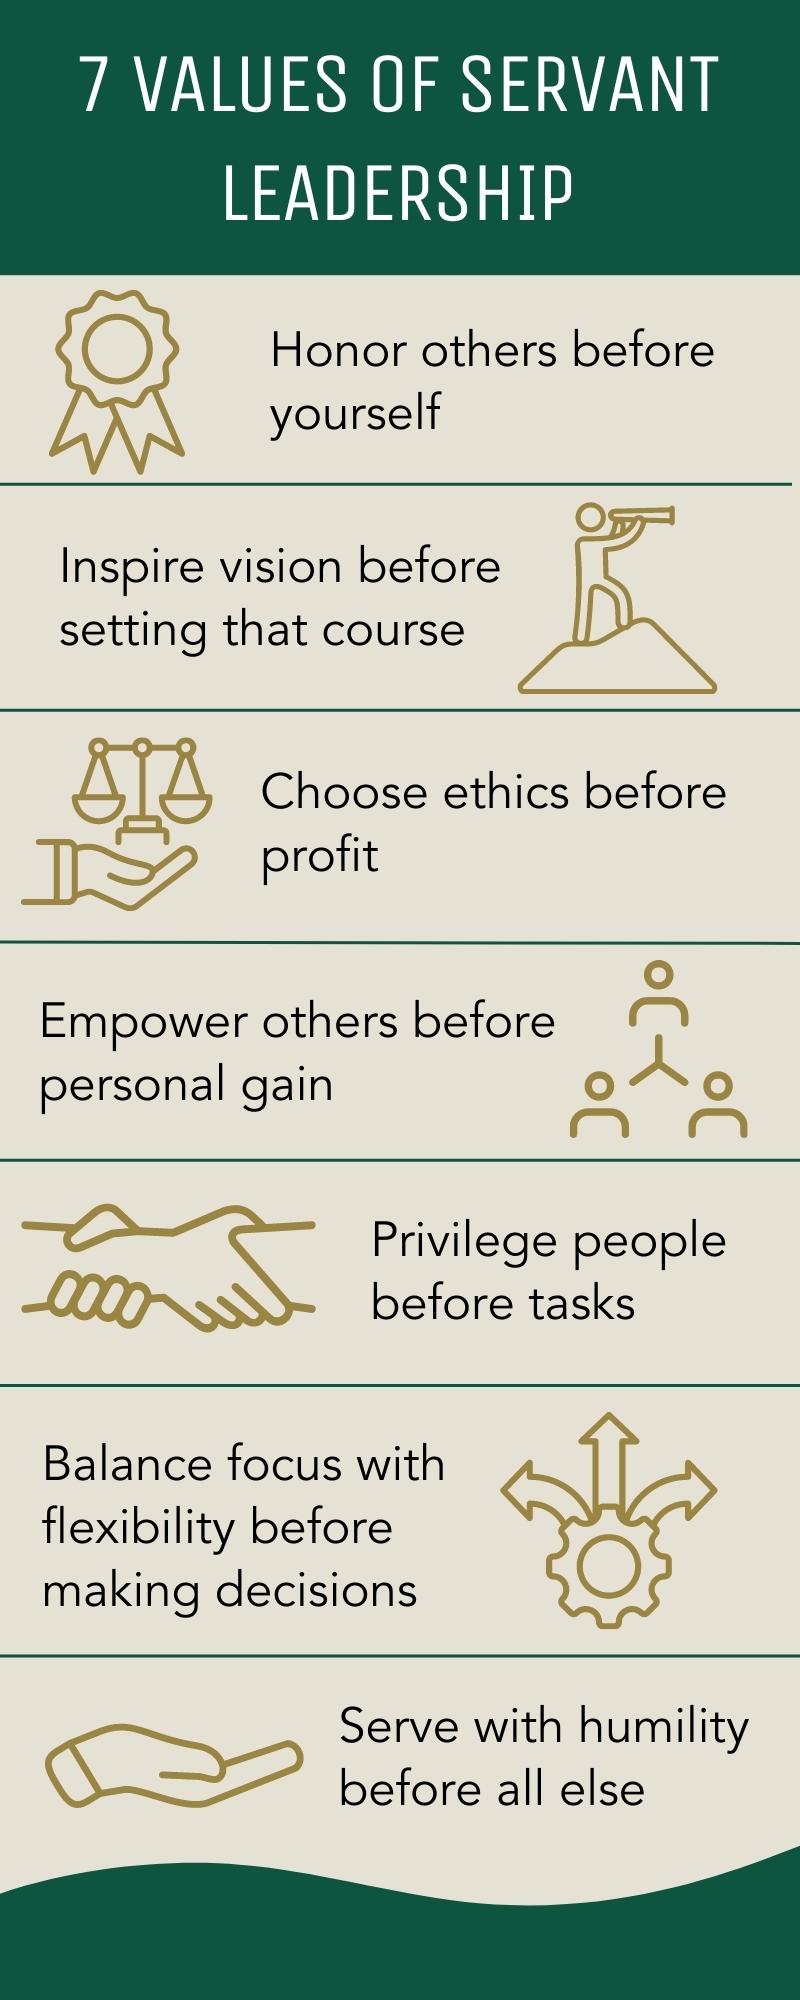 The 7 values of servant leadership